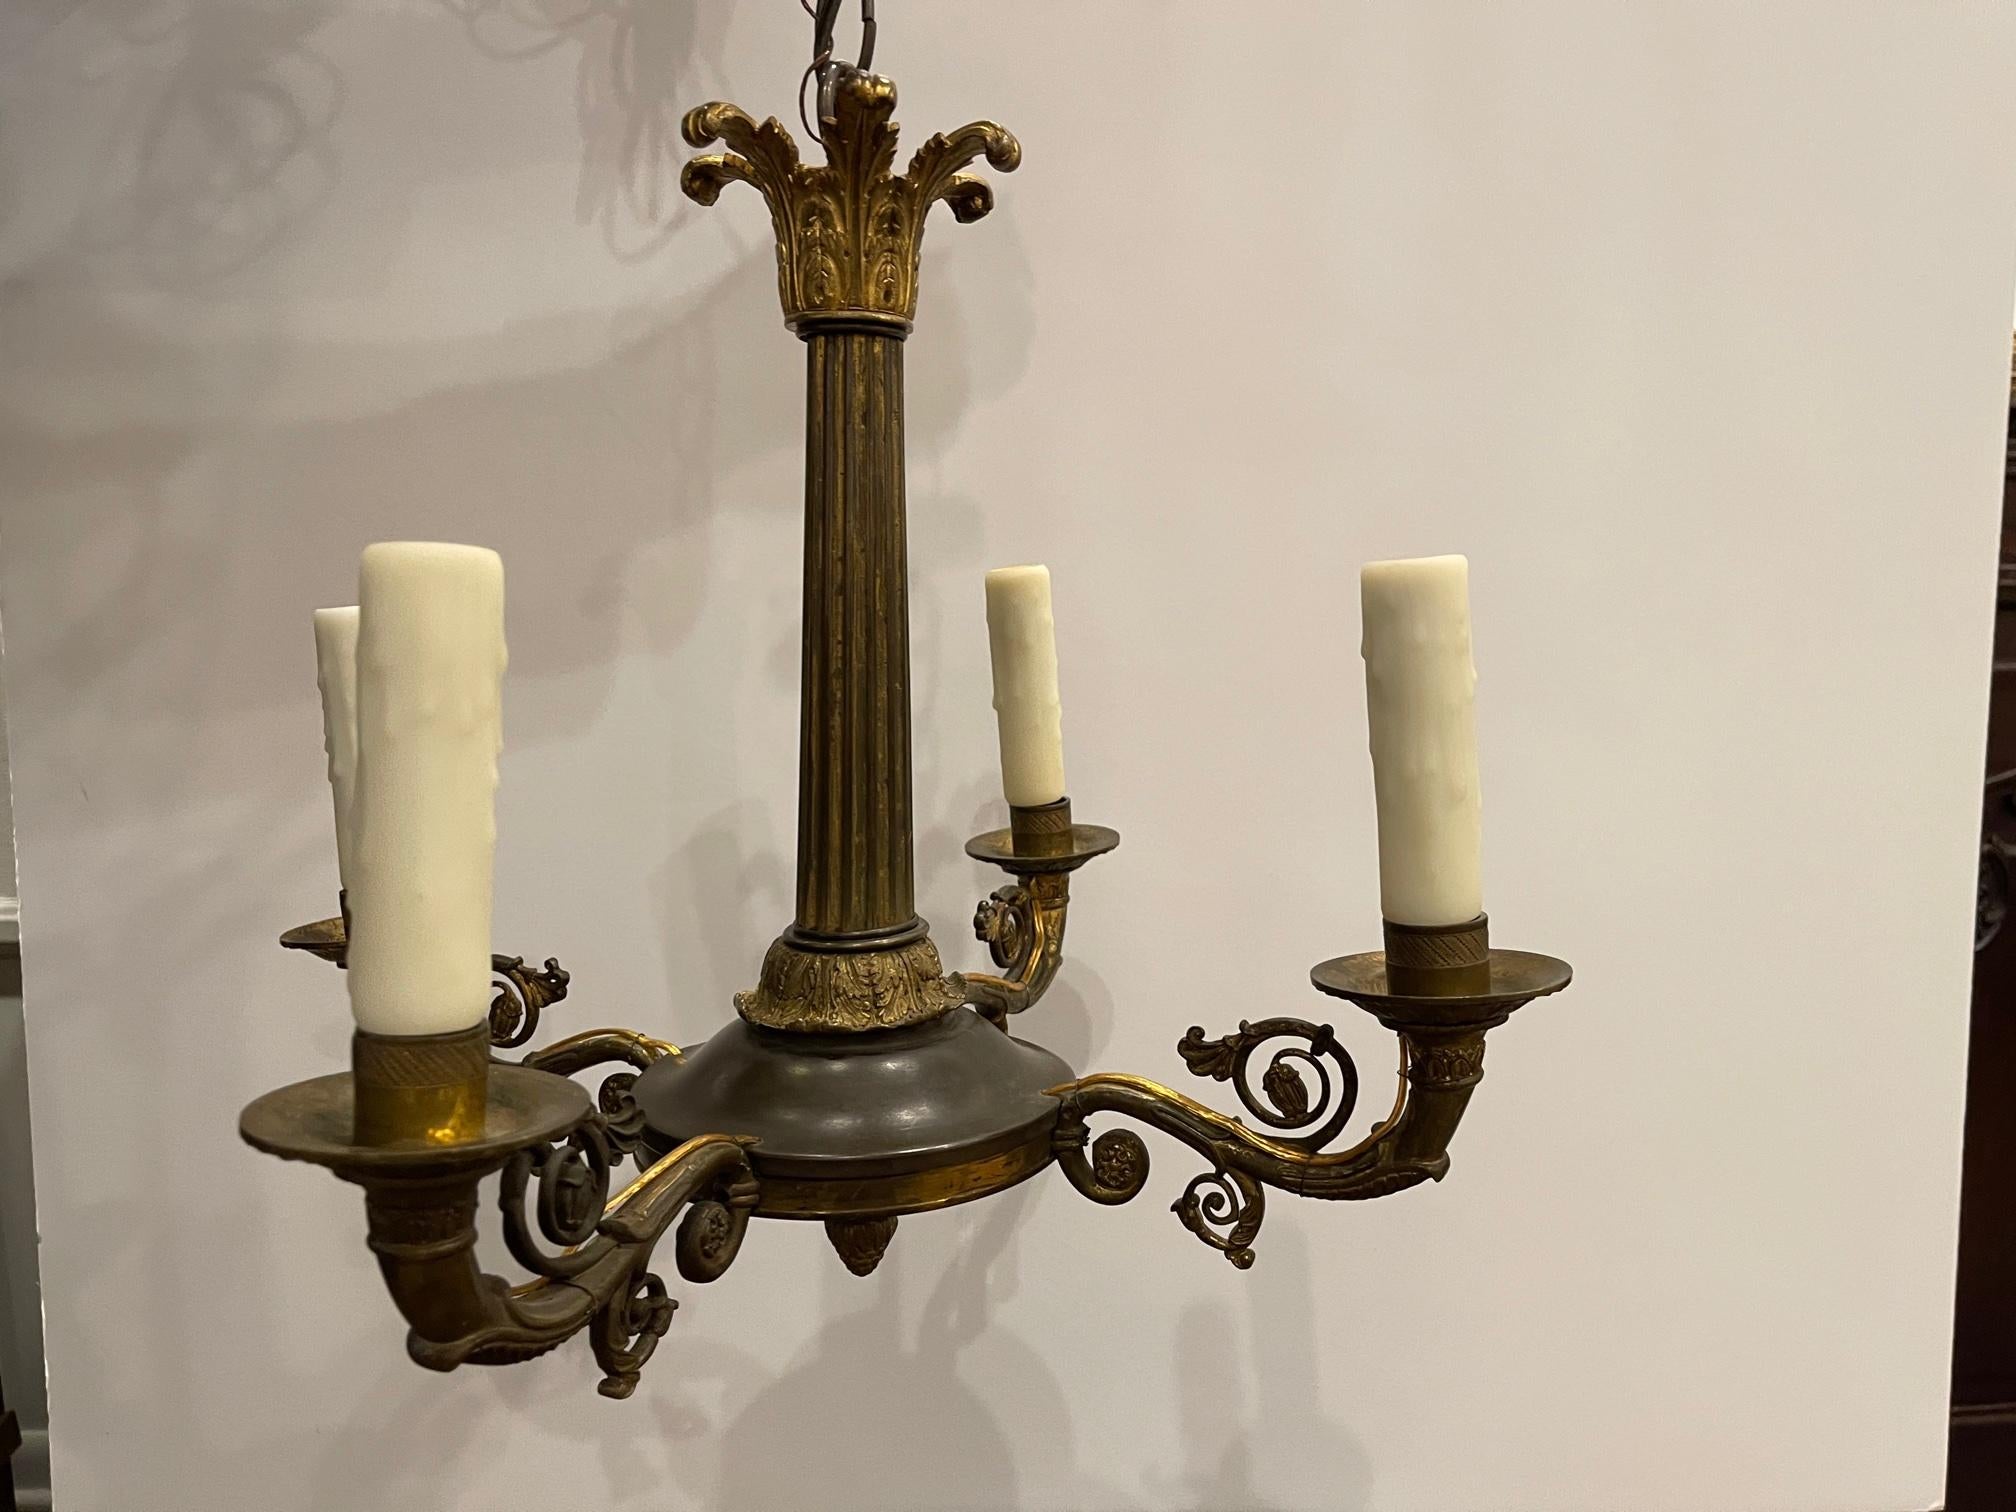 Four-light cast bronze empire style chandelier or light fixture, late 19th century.